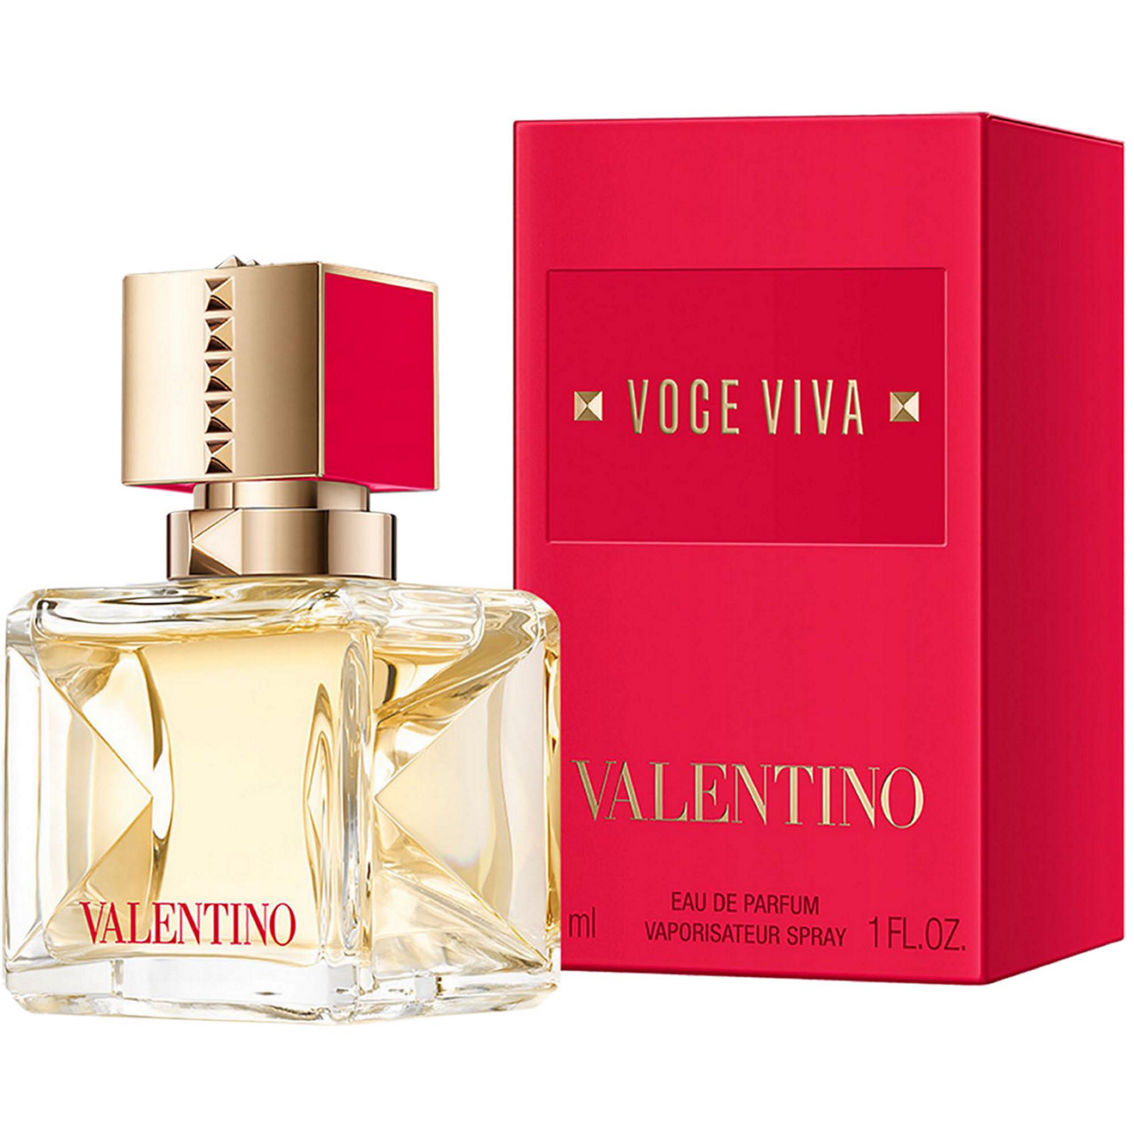 Valentino Voce Viva Eau de Parfum - Image 2 of 2